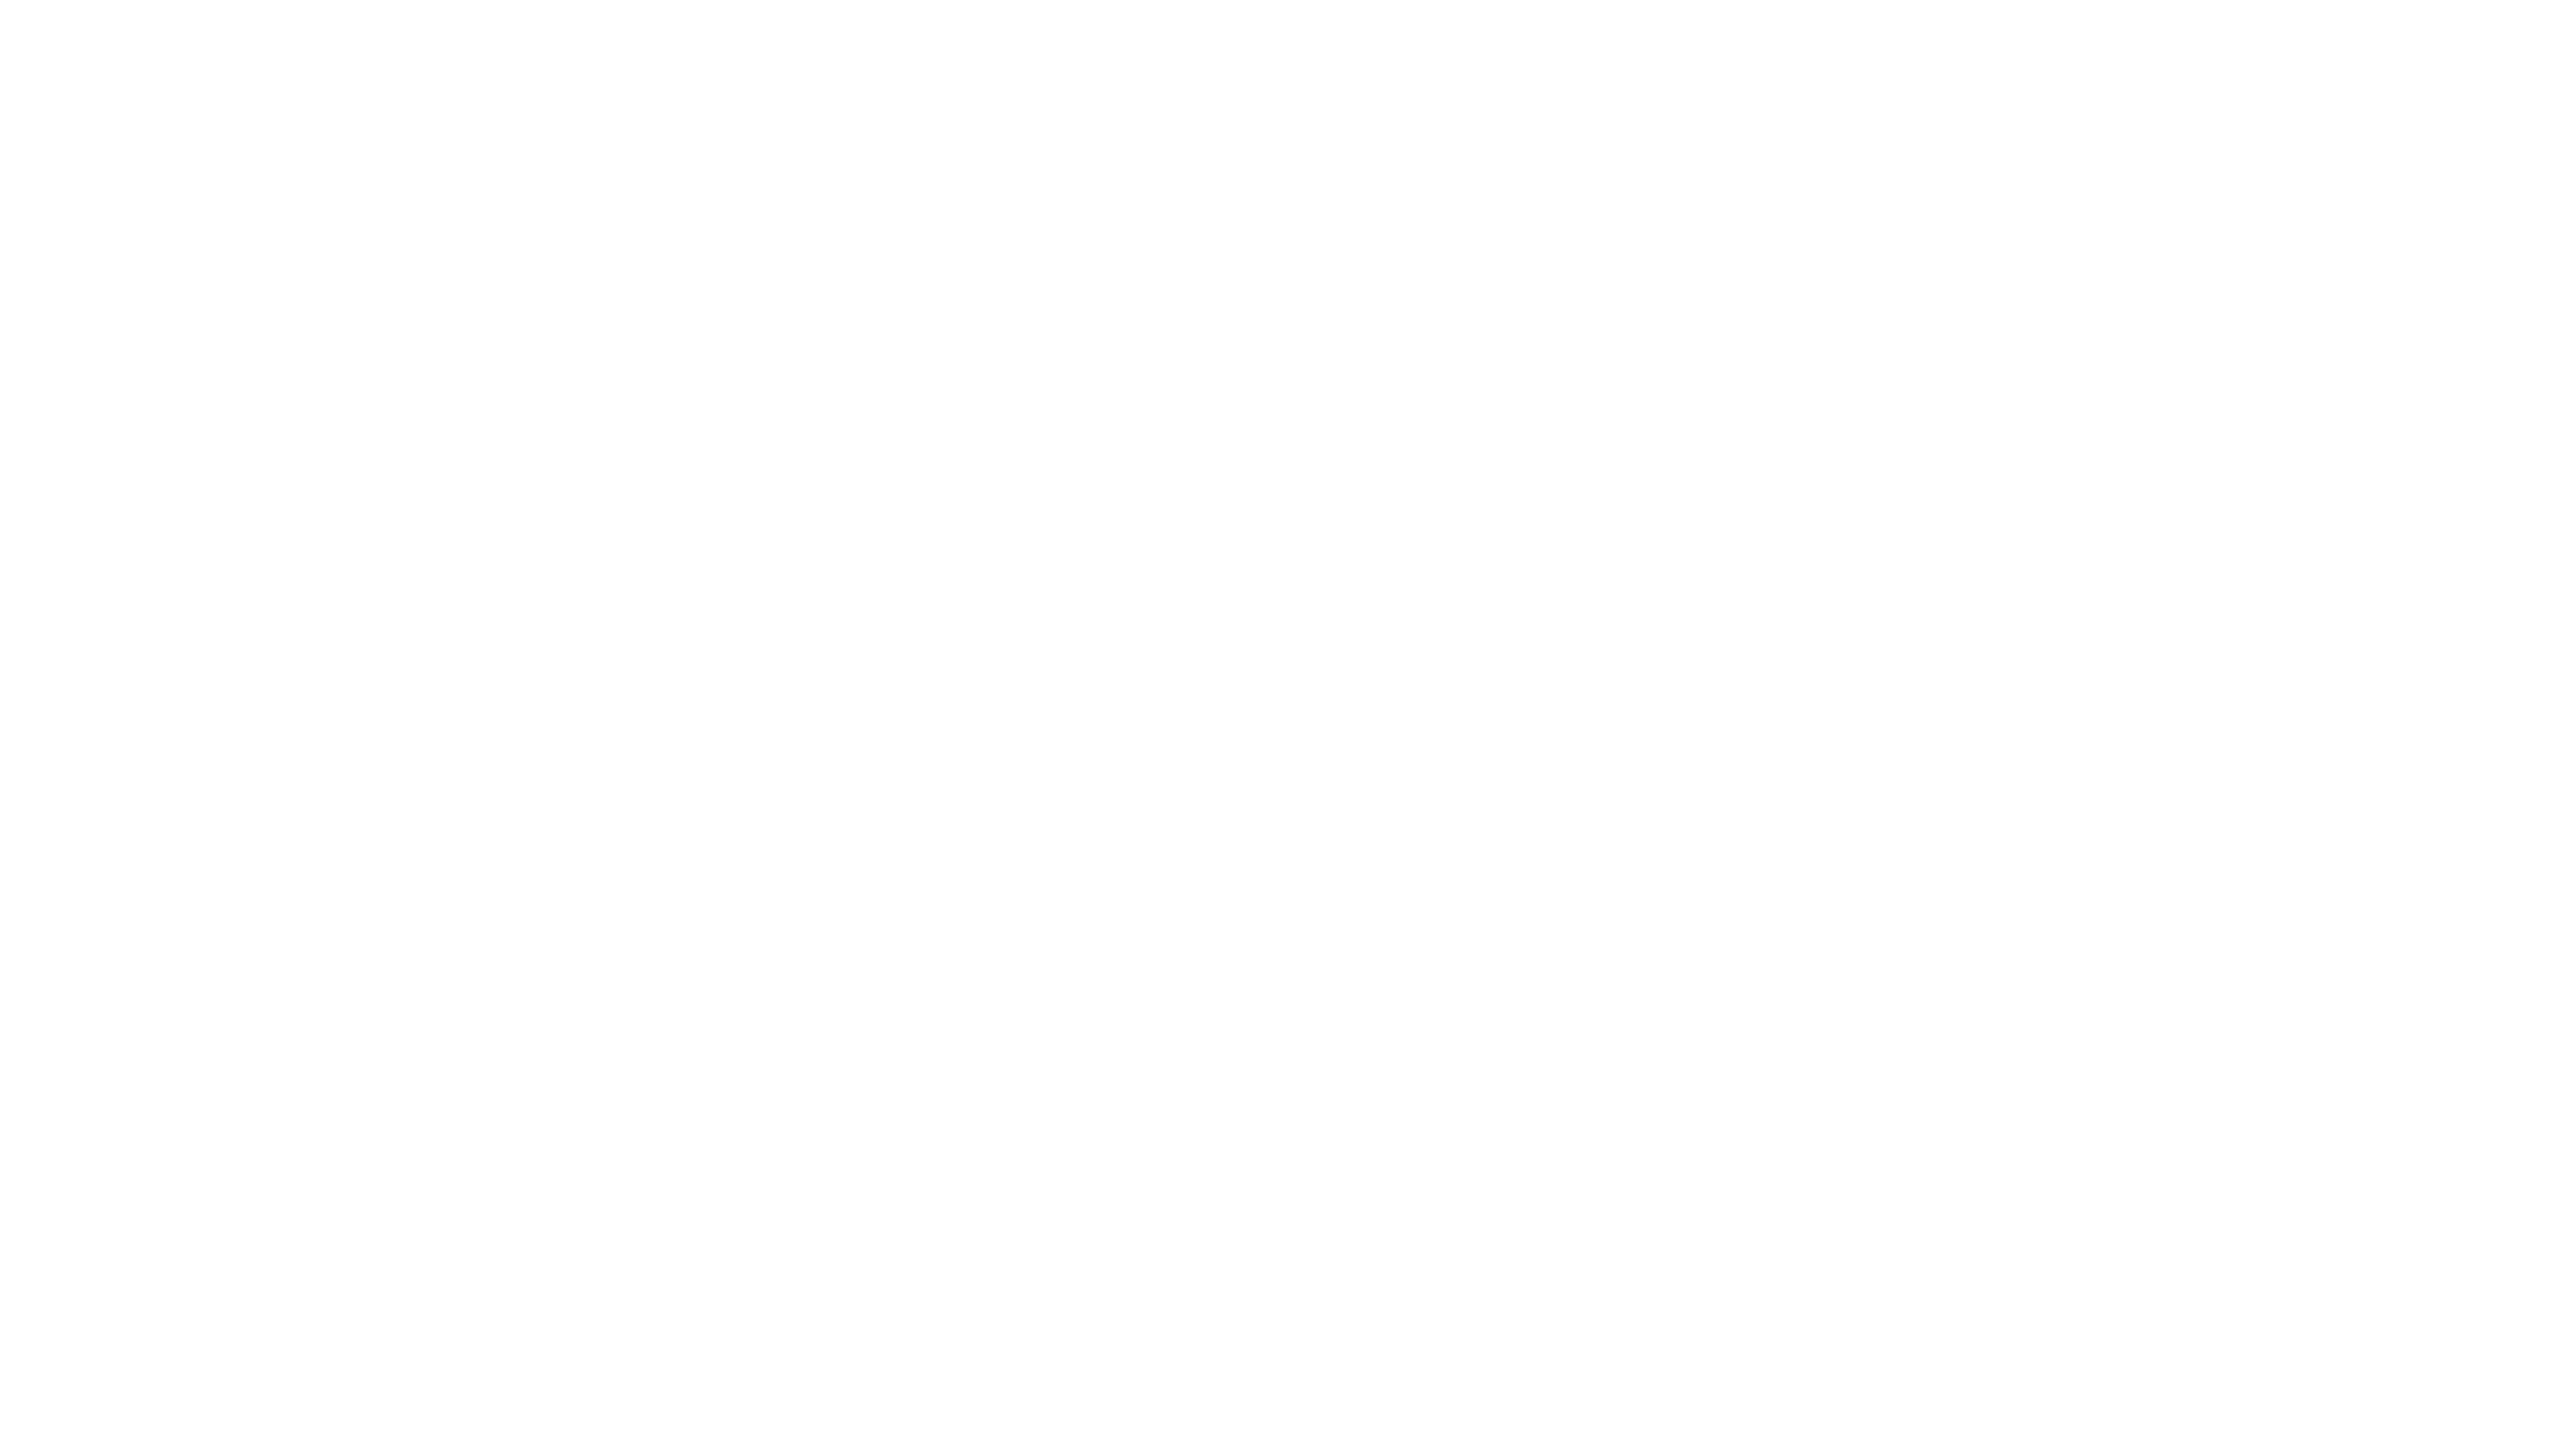 Kevin Hedin Photography